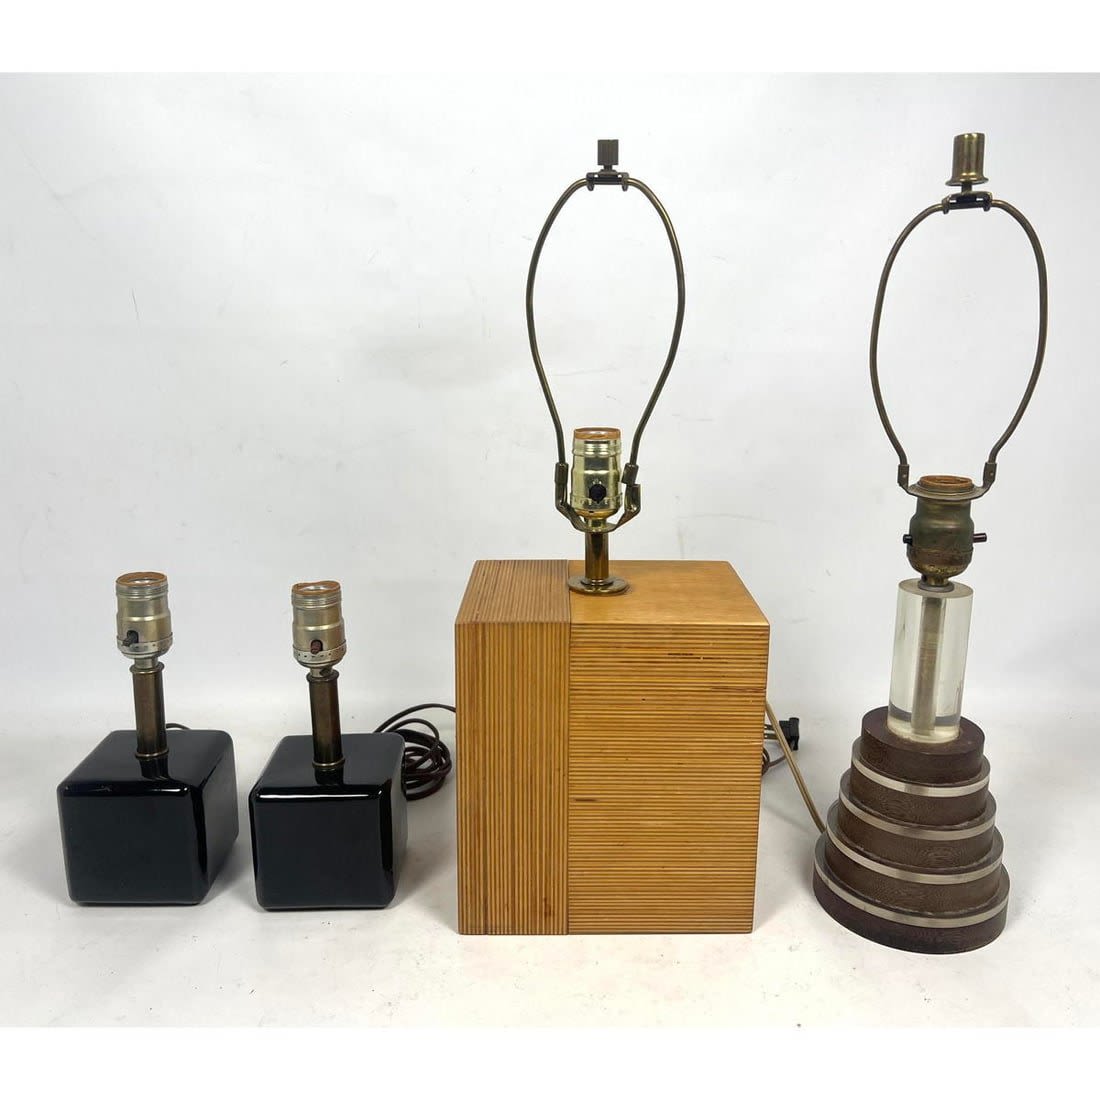 3 lamps - Pair Small Ceramic Cube